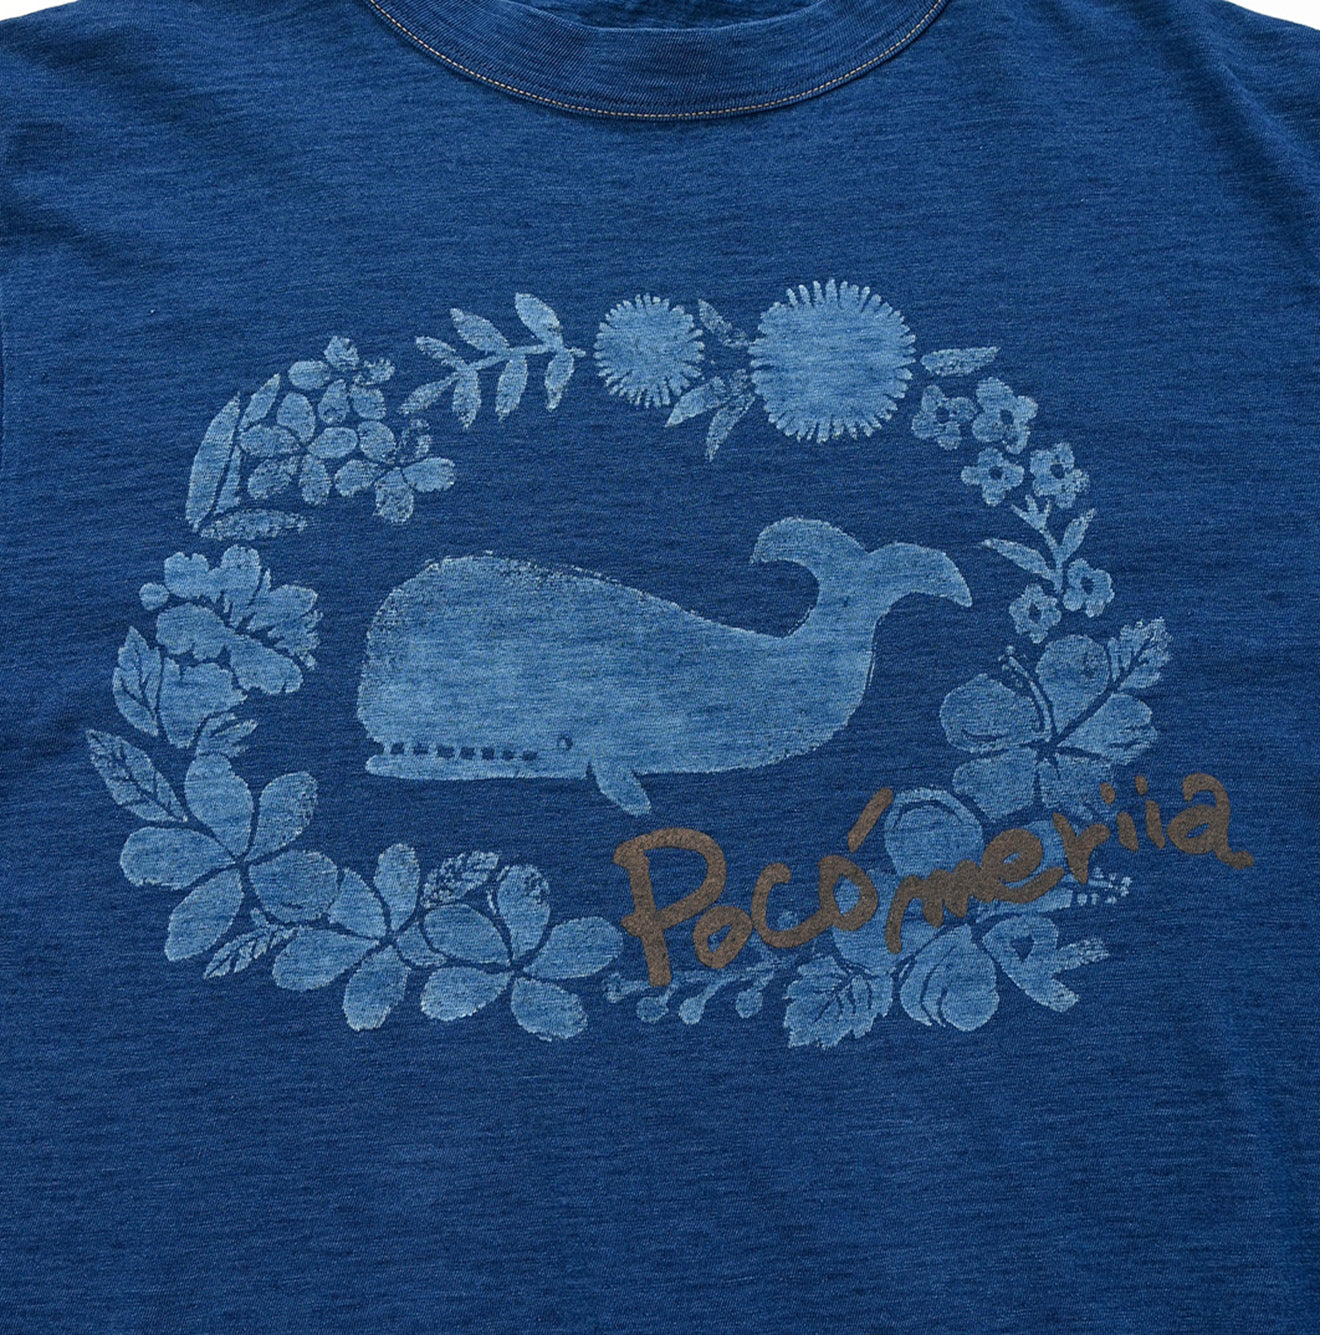 Indigo 908 Pocomeriia T-shirt